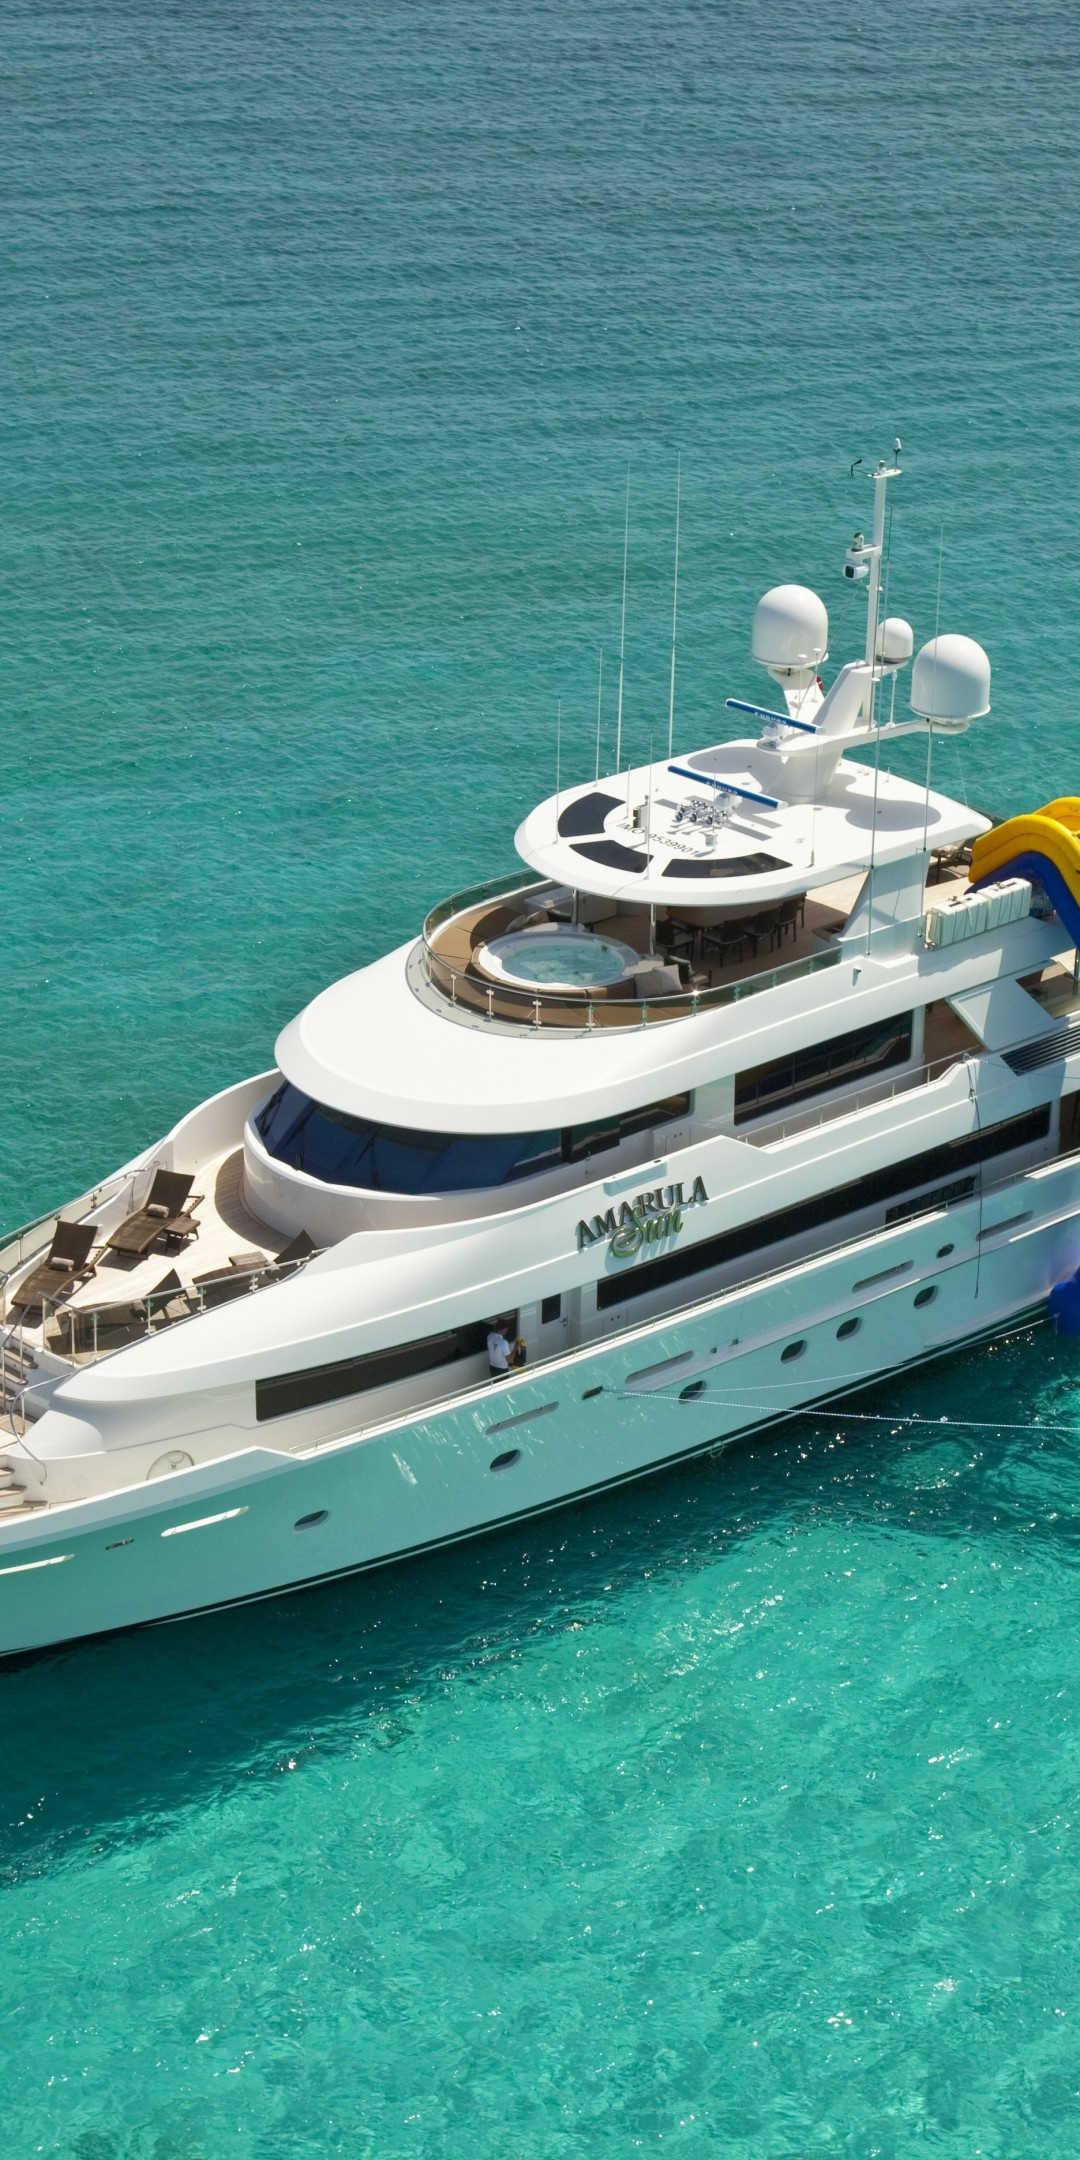 Yacht: Clean ocean, Amarula Sun, Lagoon, Luxury boat. 1080x2160 HD Wallpaper.